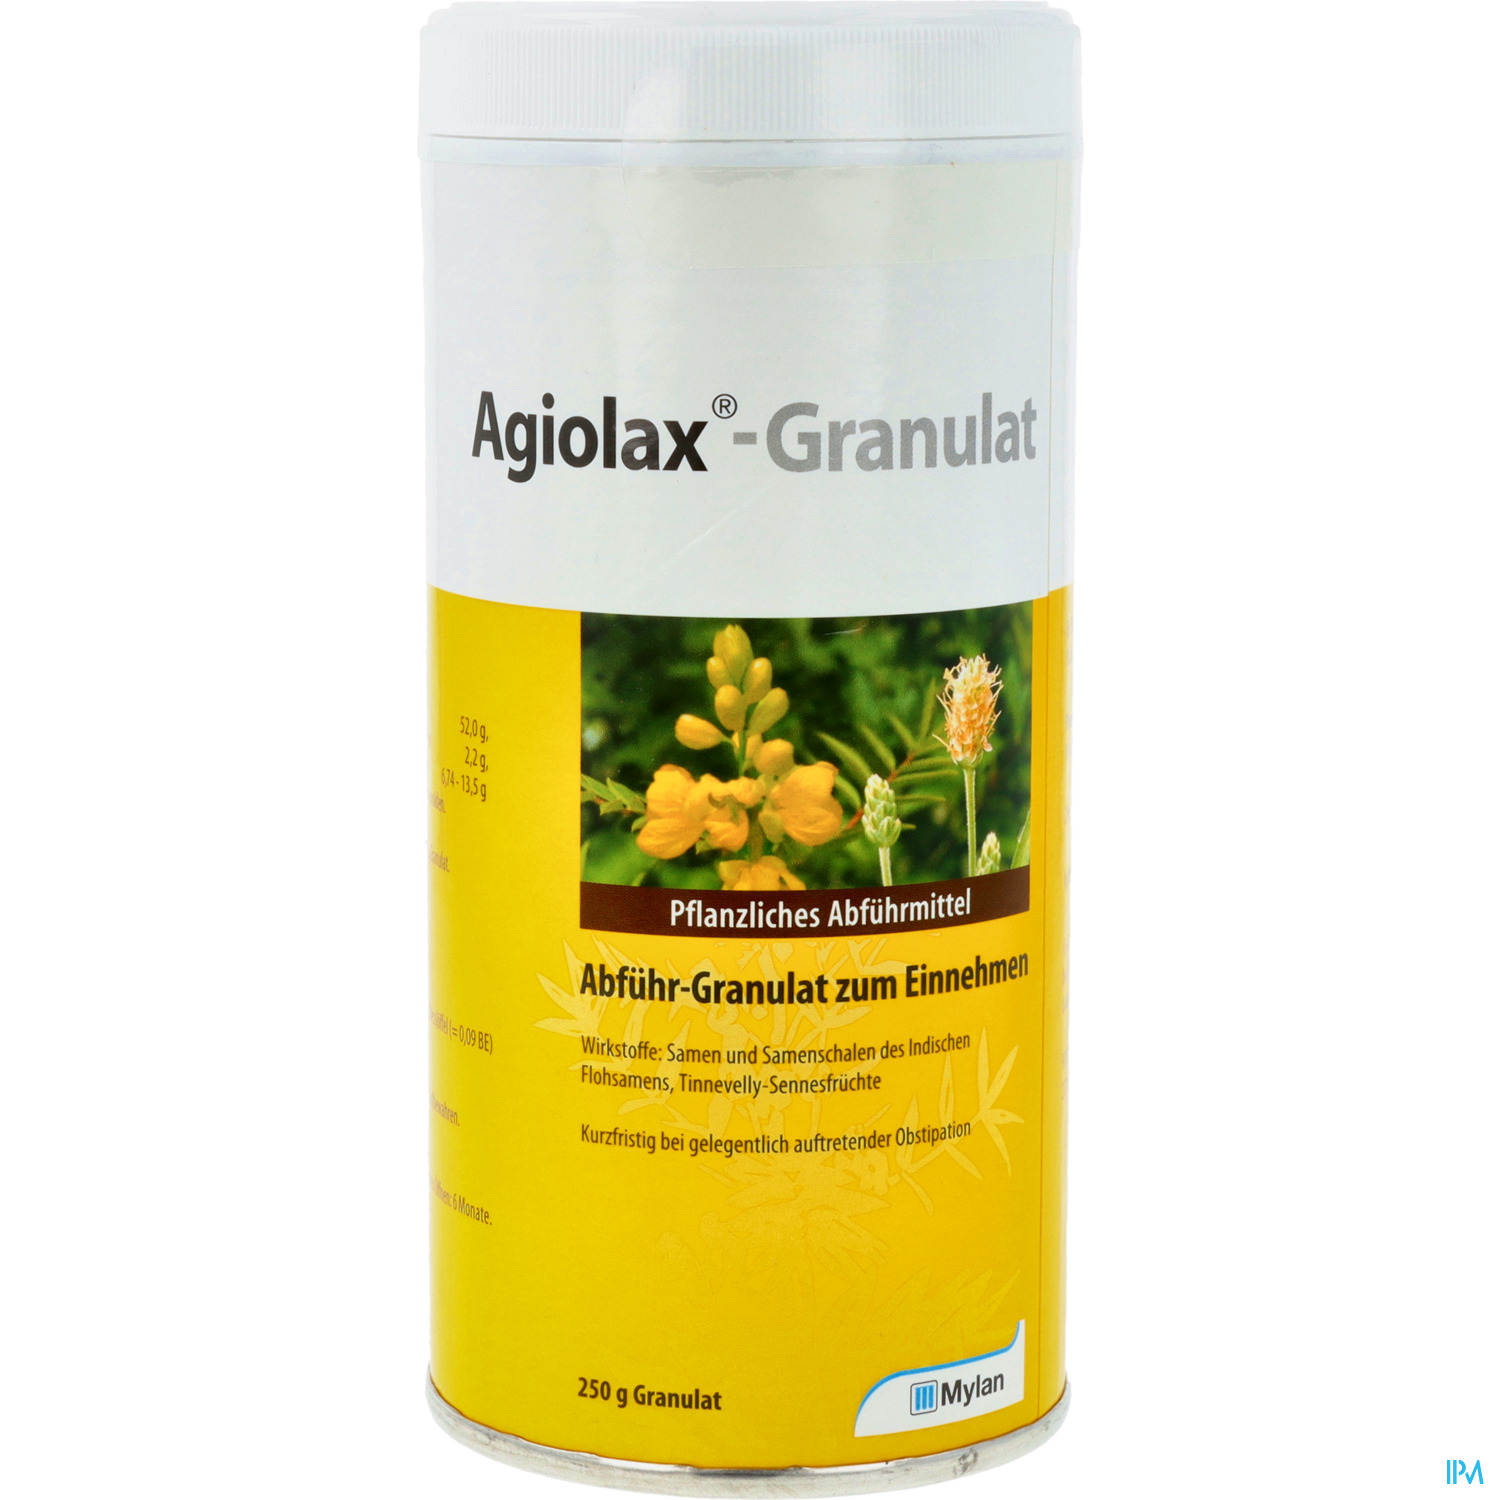 Agiolax - Granulat